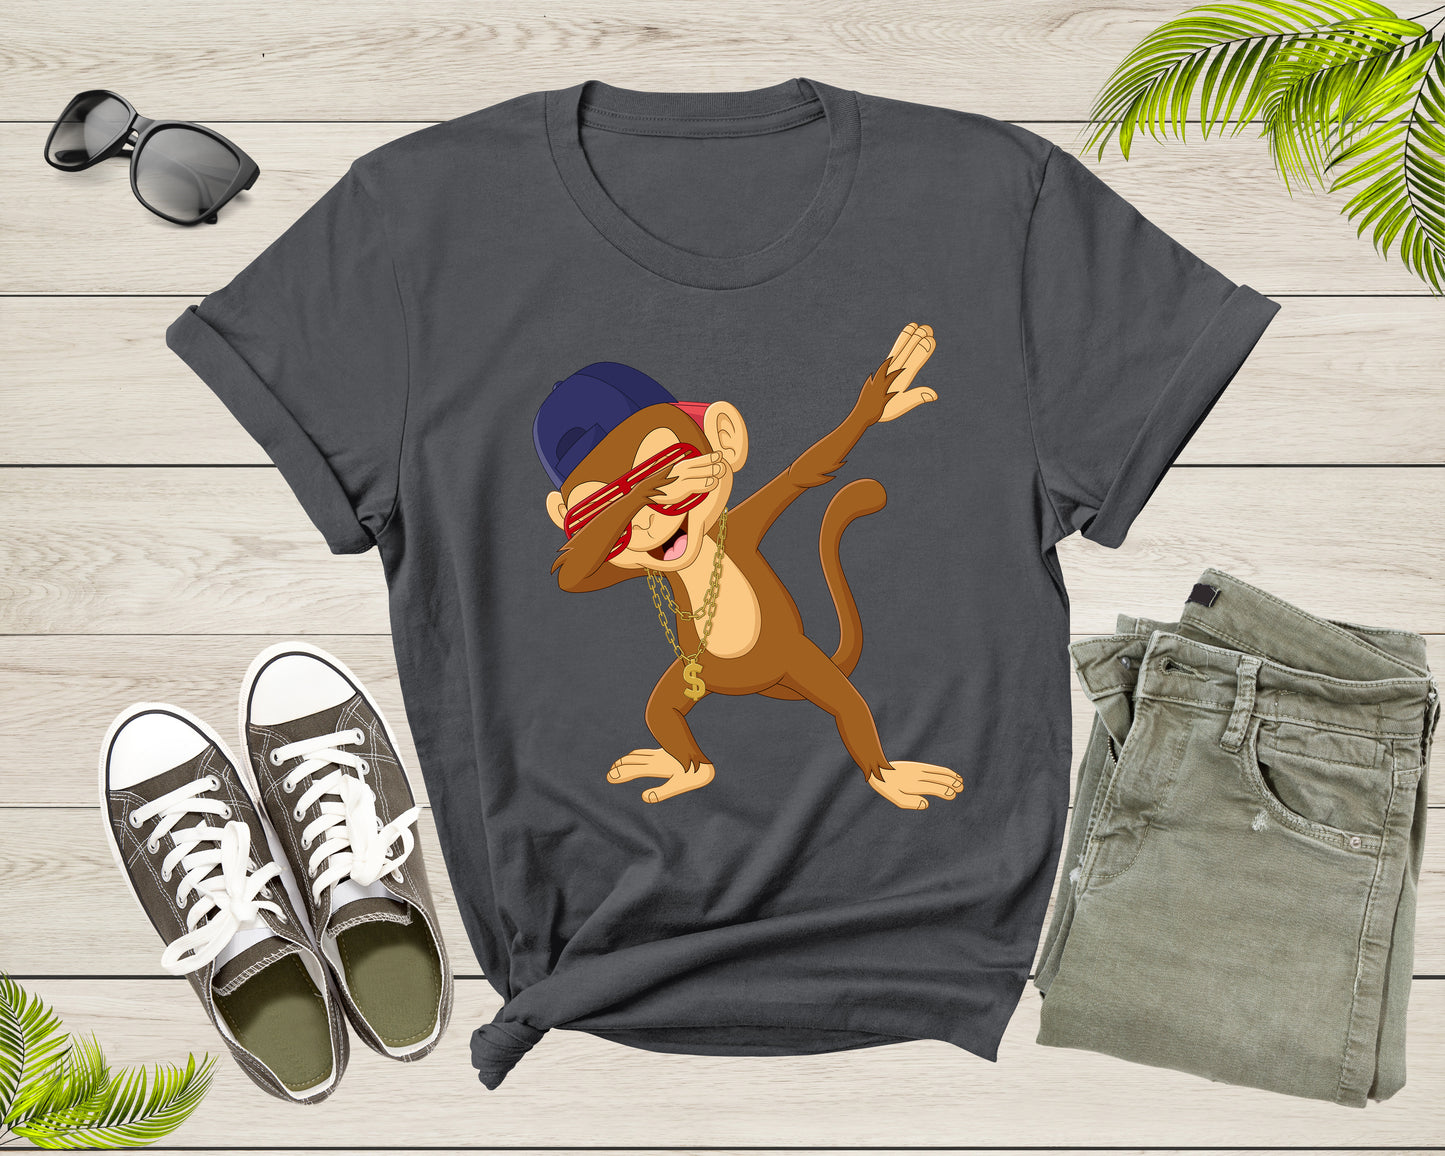 Cool Dabbing Dancing Monkey Wearing Sunglasses Hat Necklace T-Shirt Monkey Shirt for Men Women Kids Boys Girls Teens Graphic Gift Tshirt